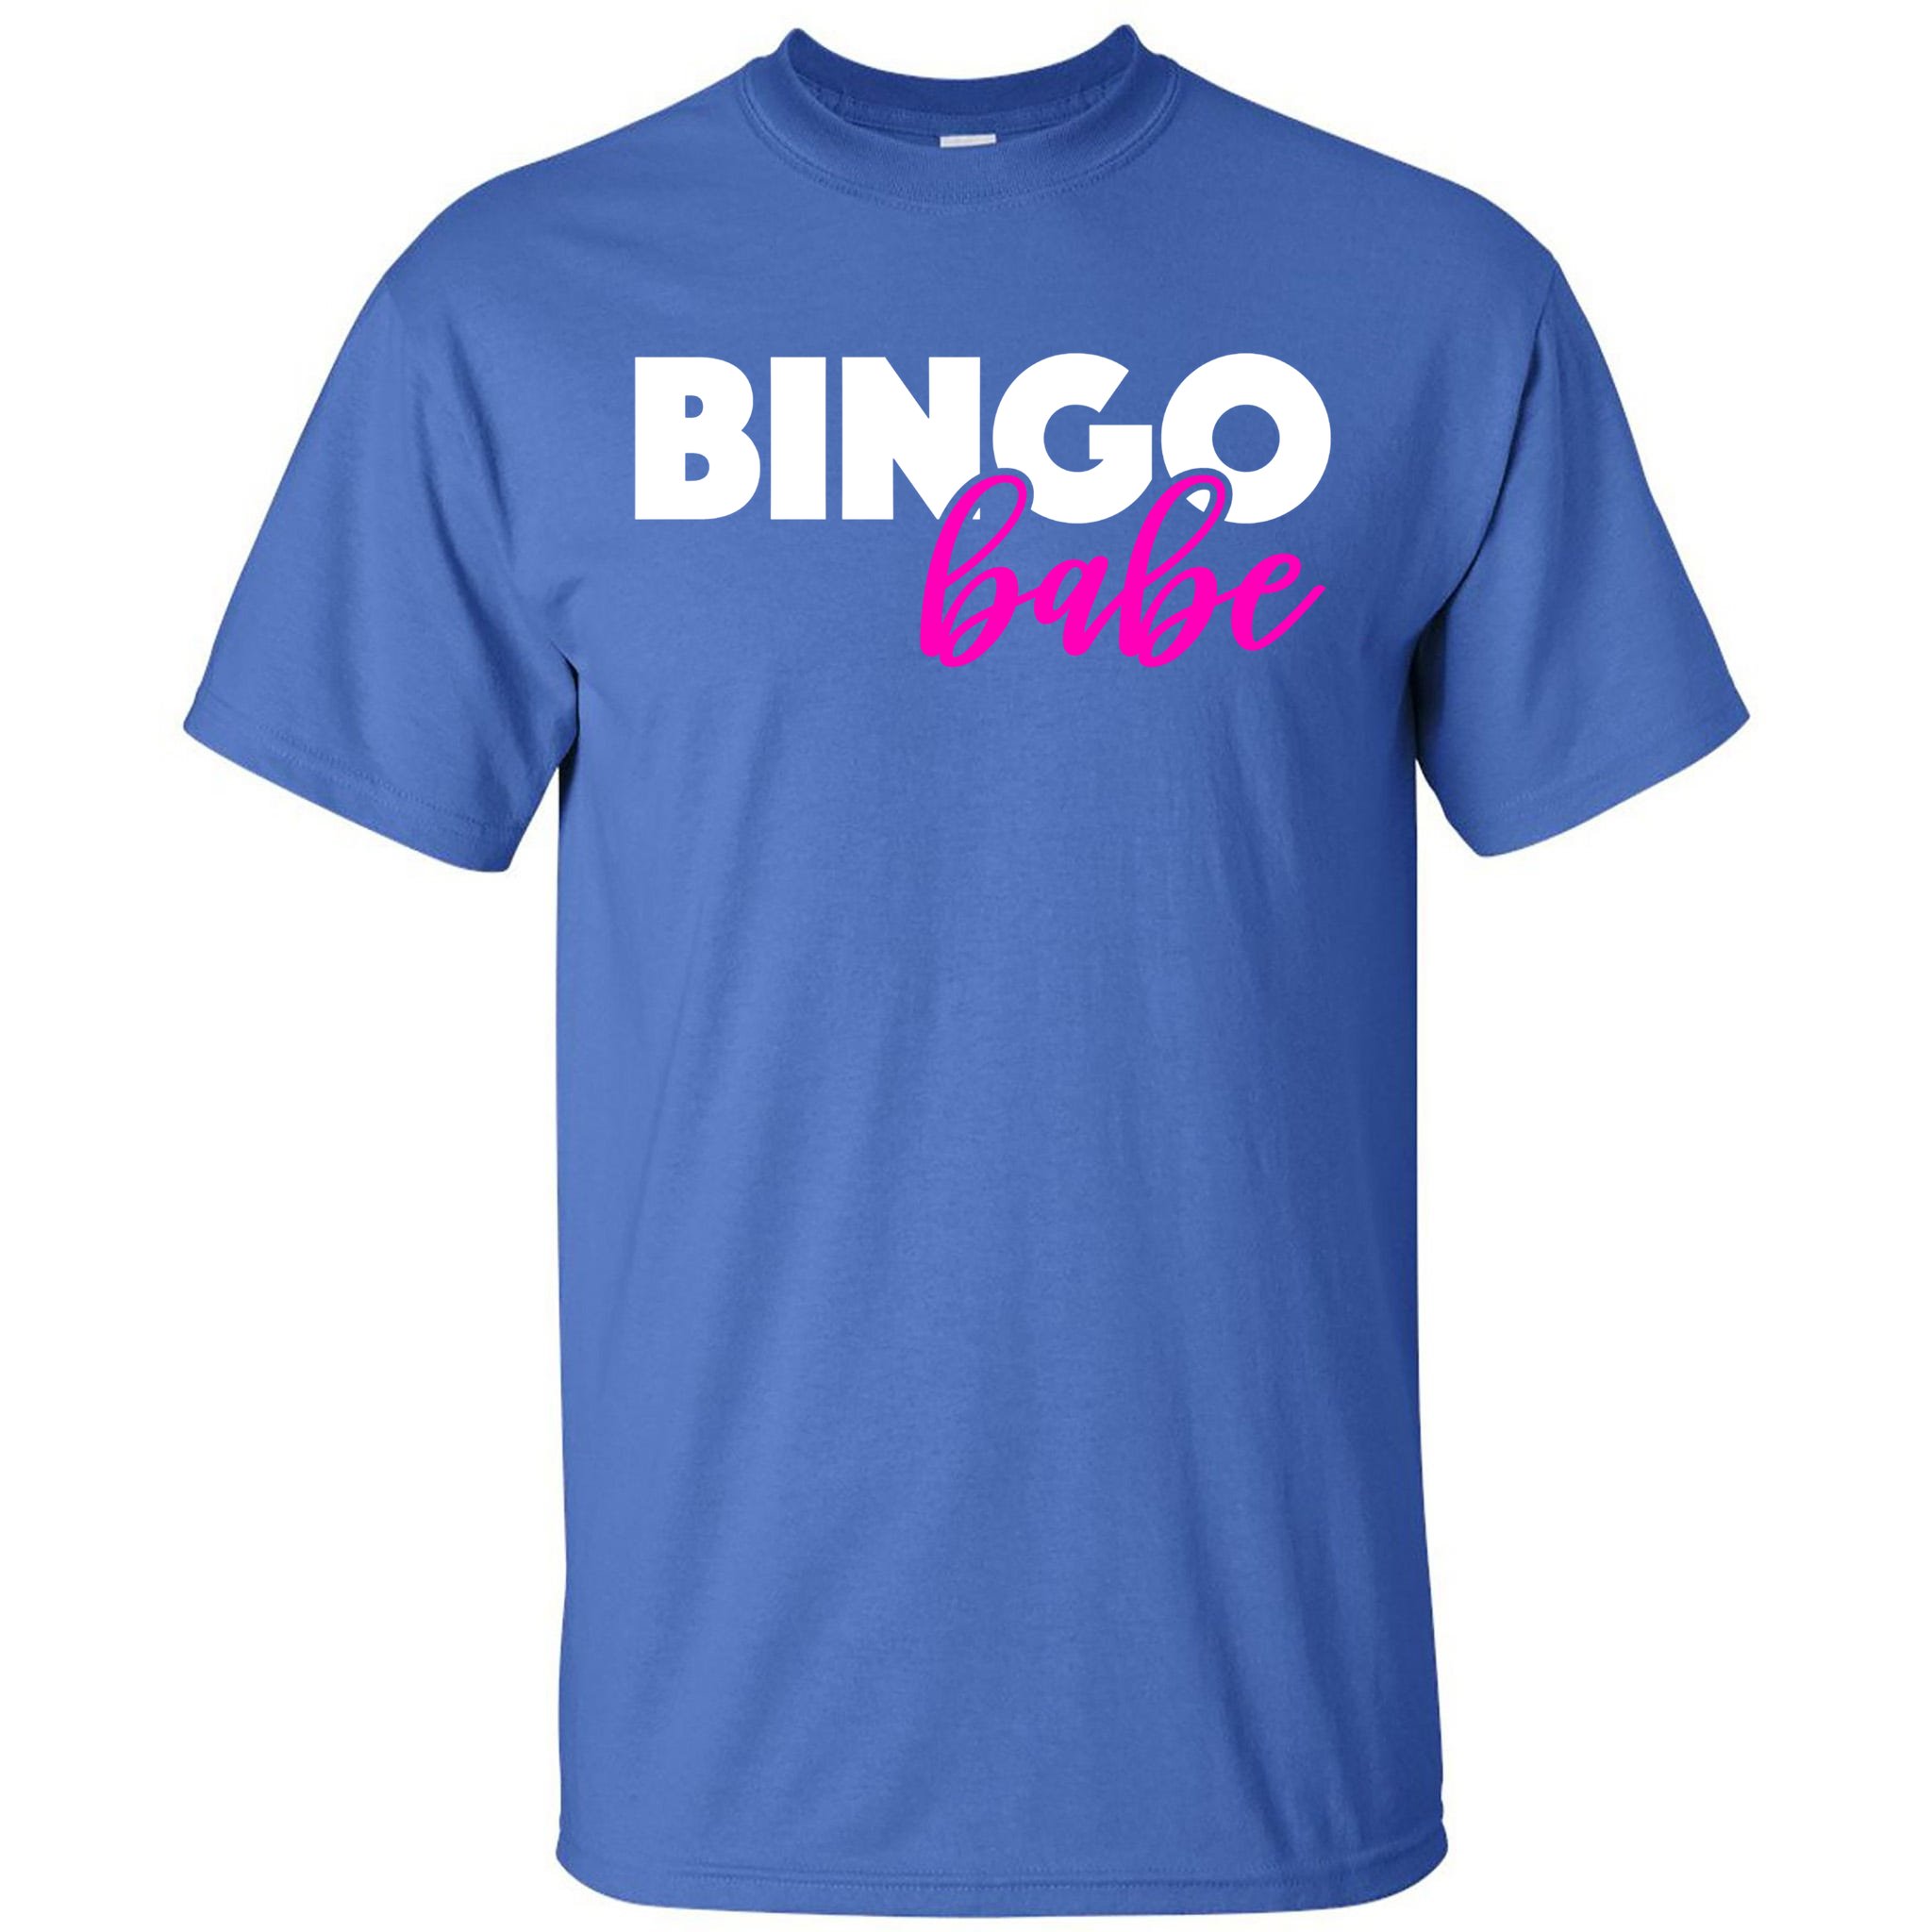 Bingo Chritsmas Sweatshirt Funny Bluey Shirt - Happy Place for Music Lovers